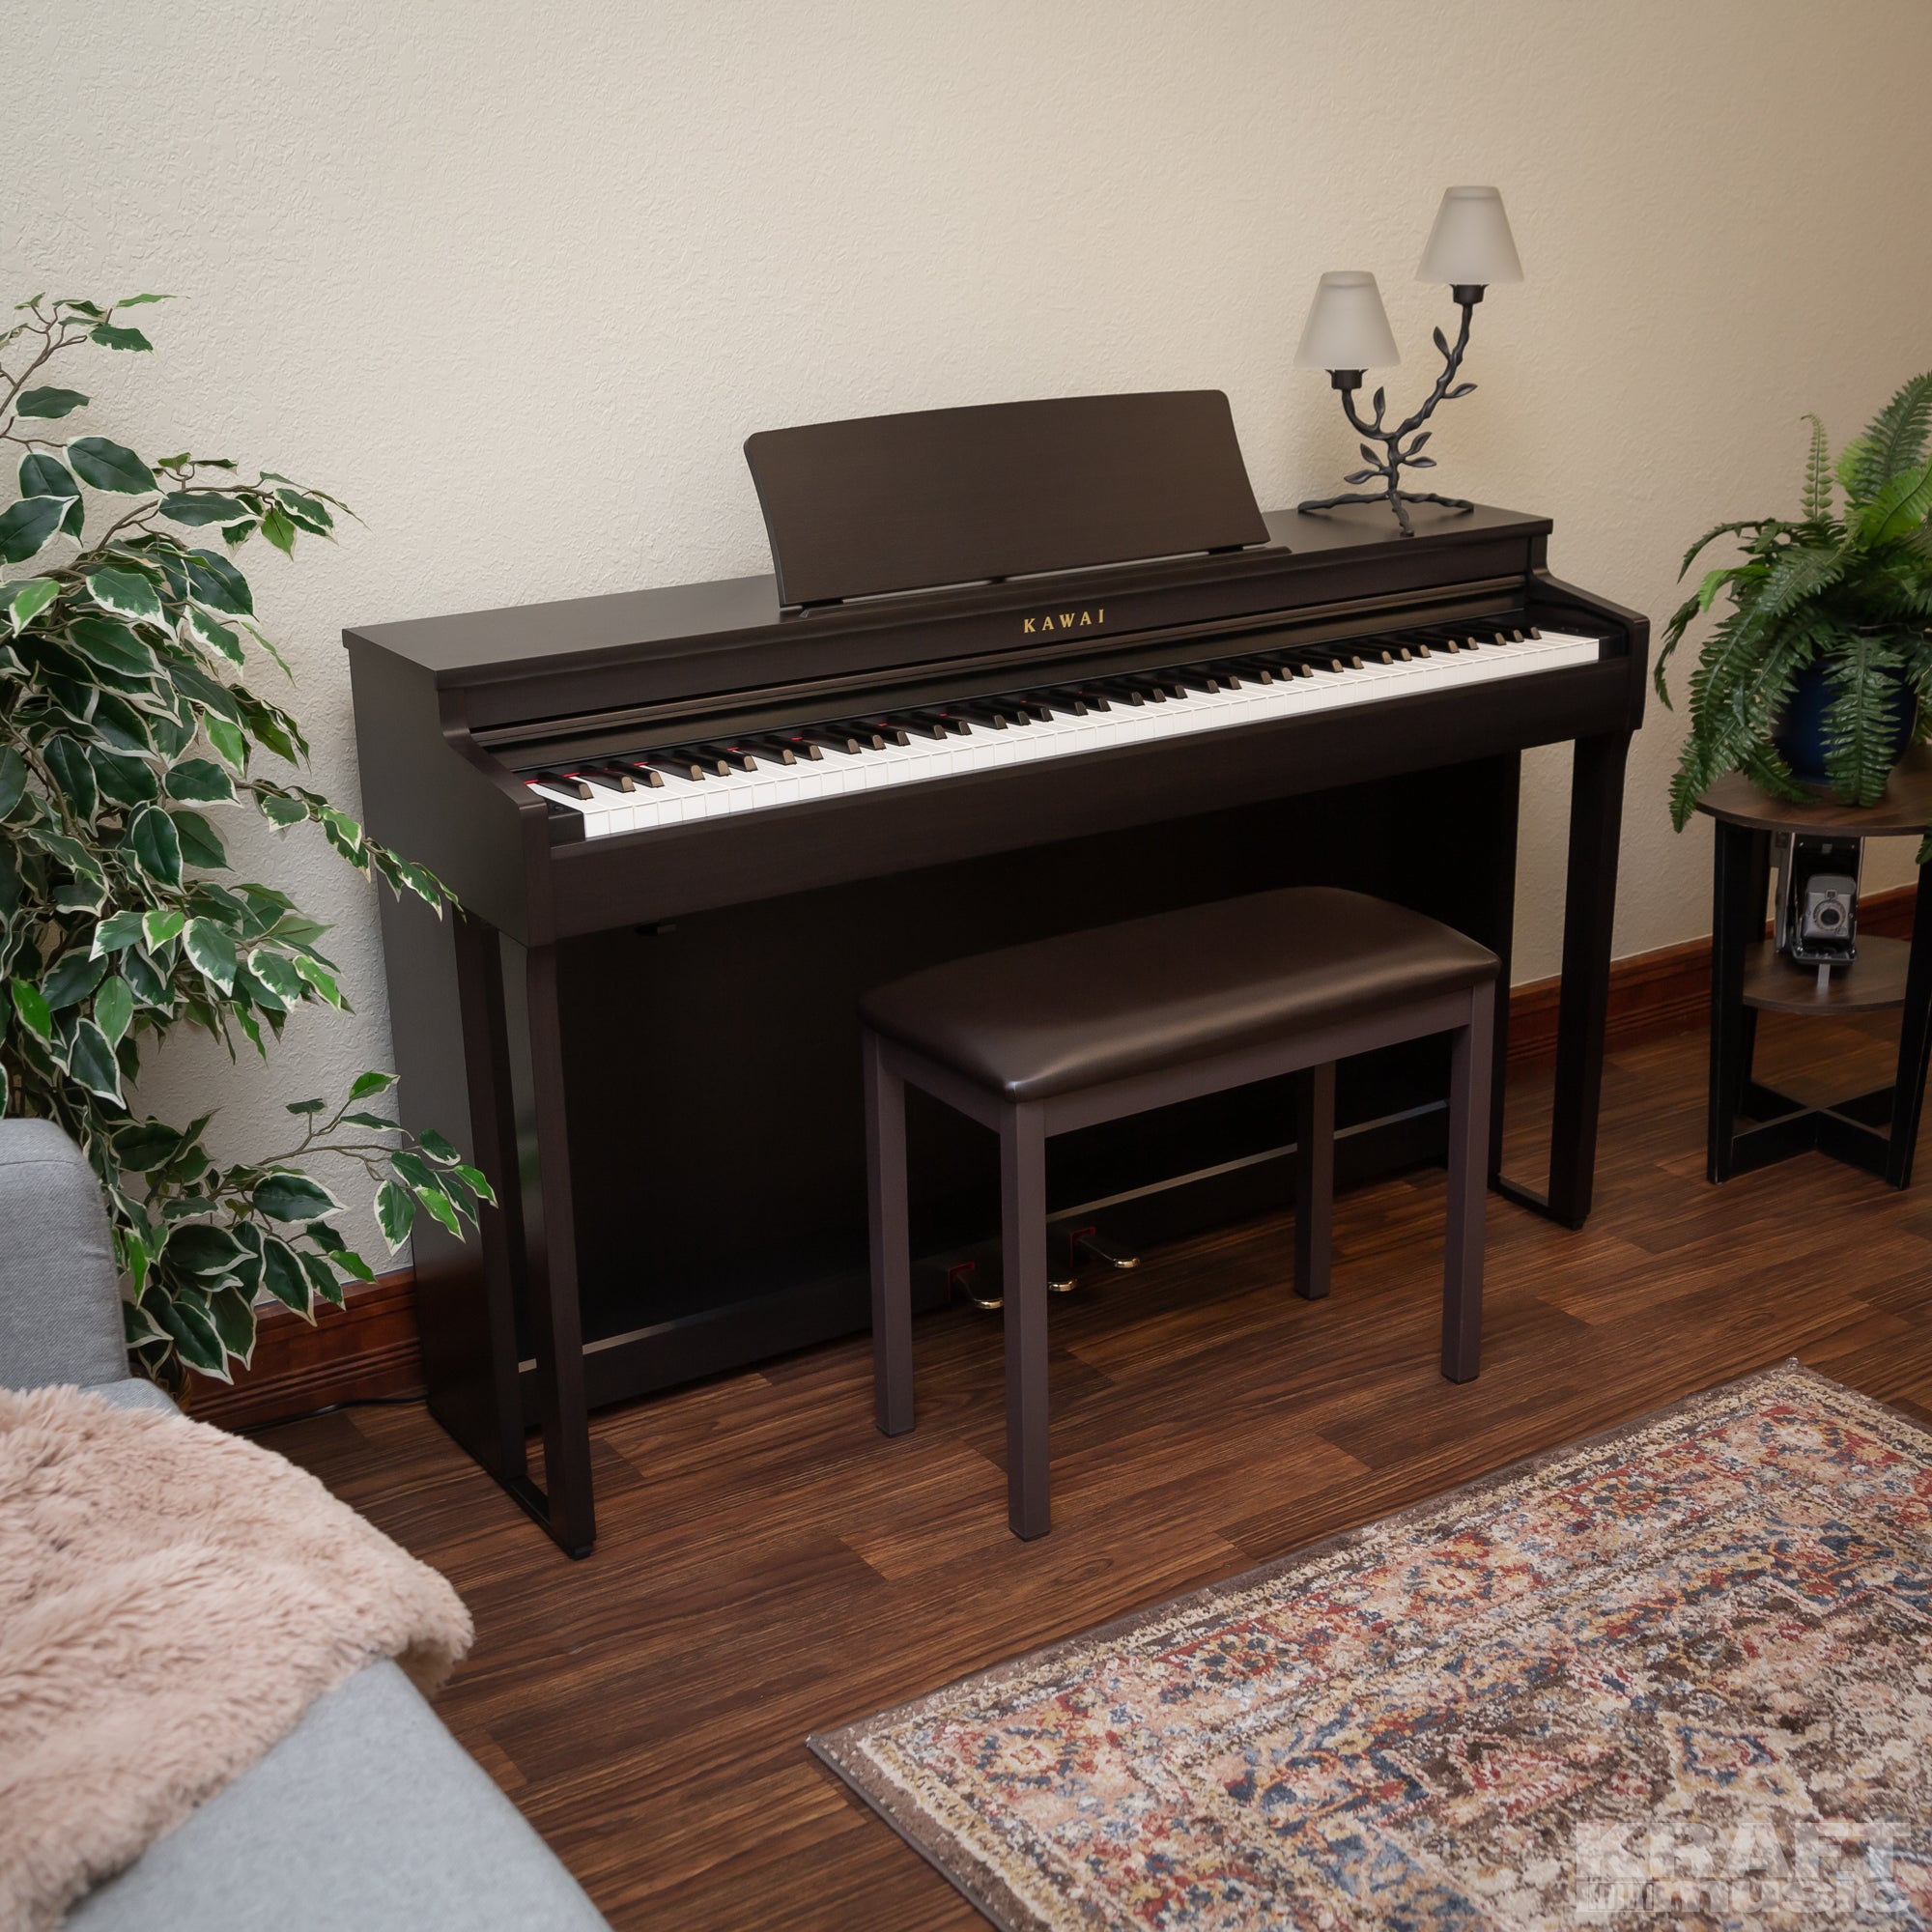 Kawai CN201 Digital Piano - Premium Rosewood - in a stylish living room